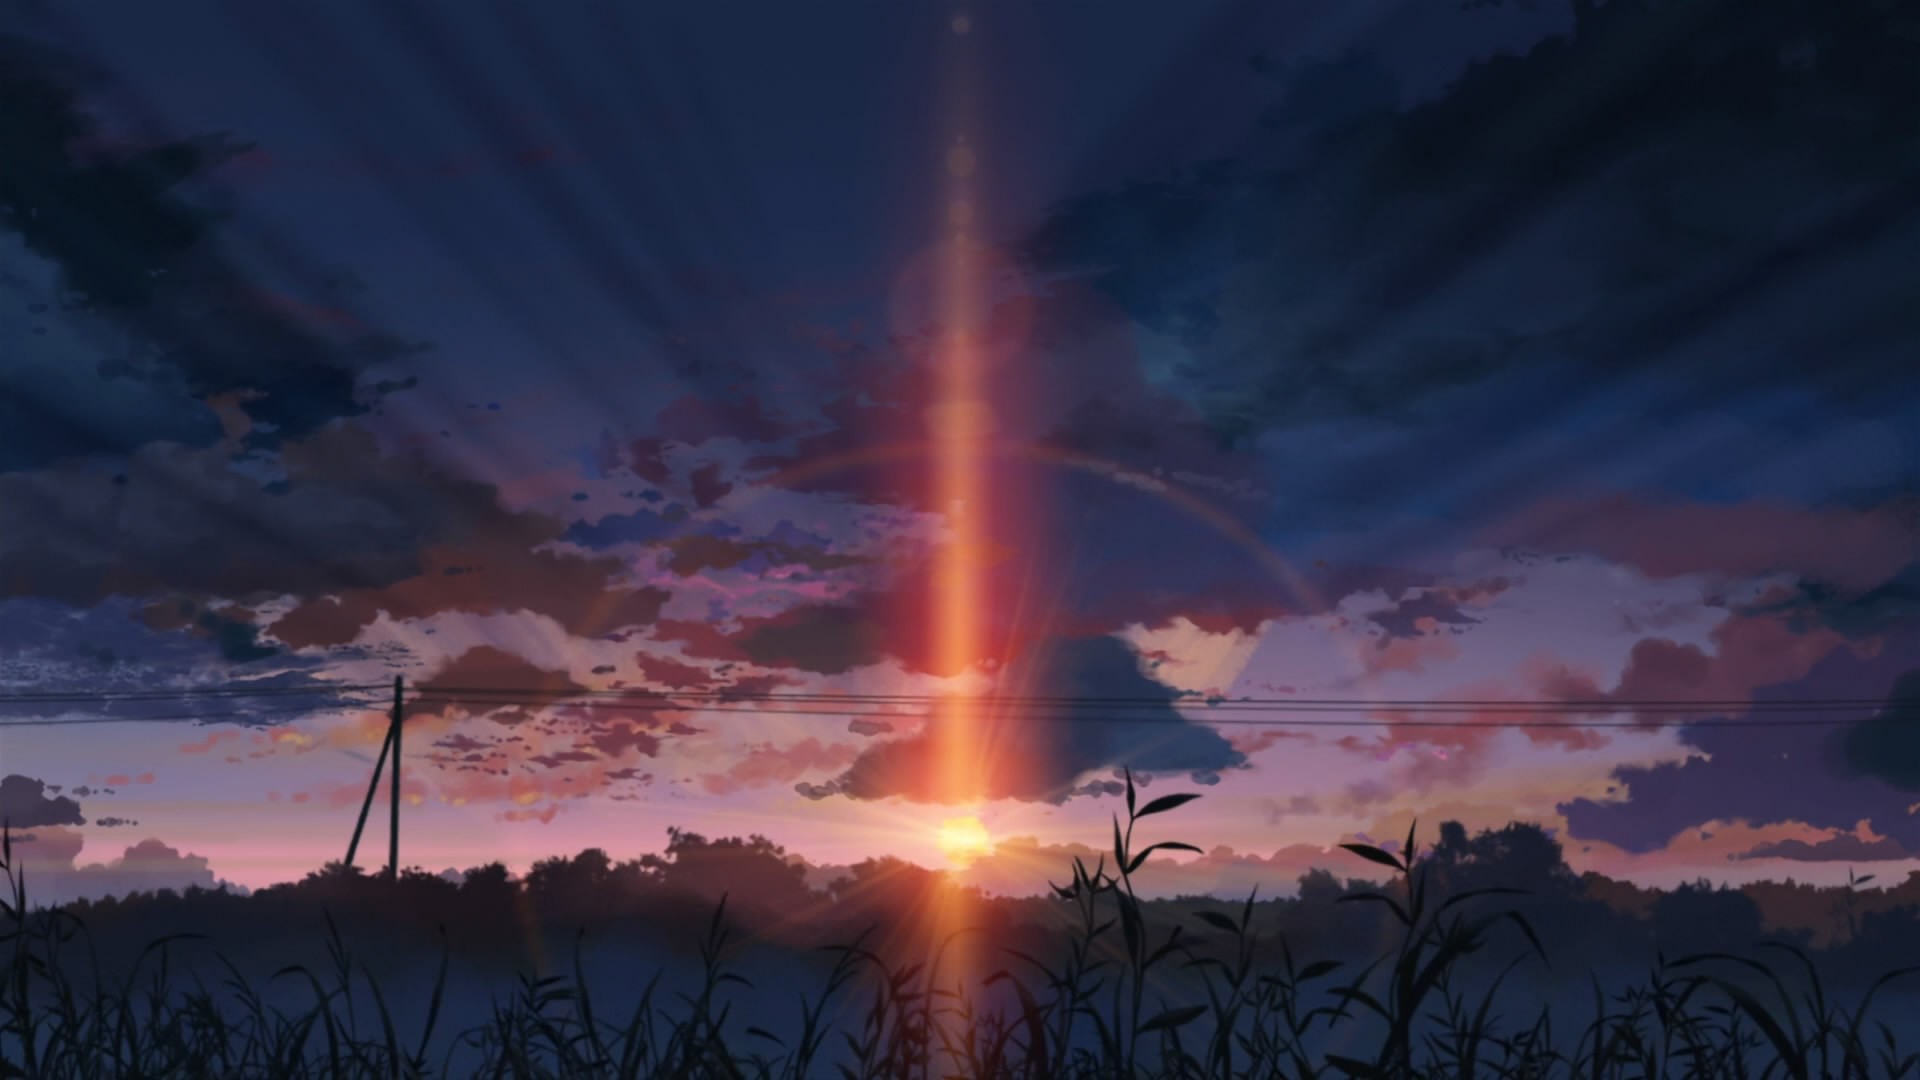 1920x1080 sunset 5 centimeters per second anime landscape wallpaper JPG 140 kB Gallery HD Wallpaper